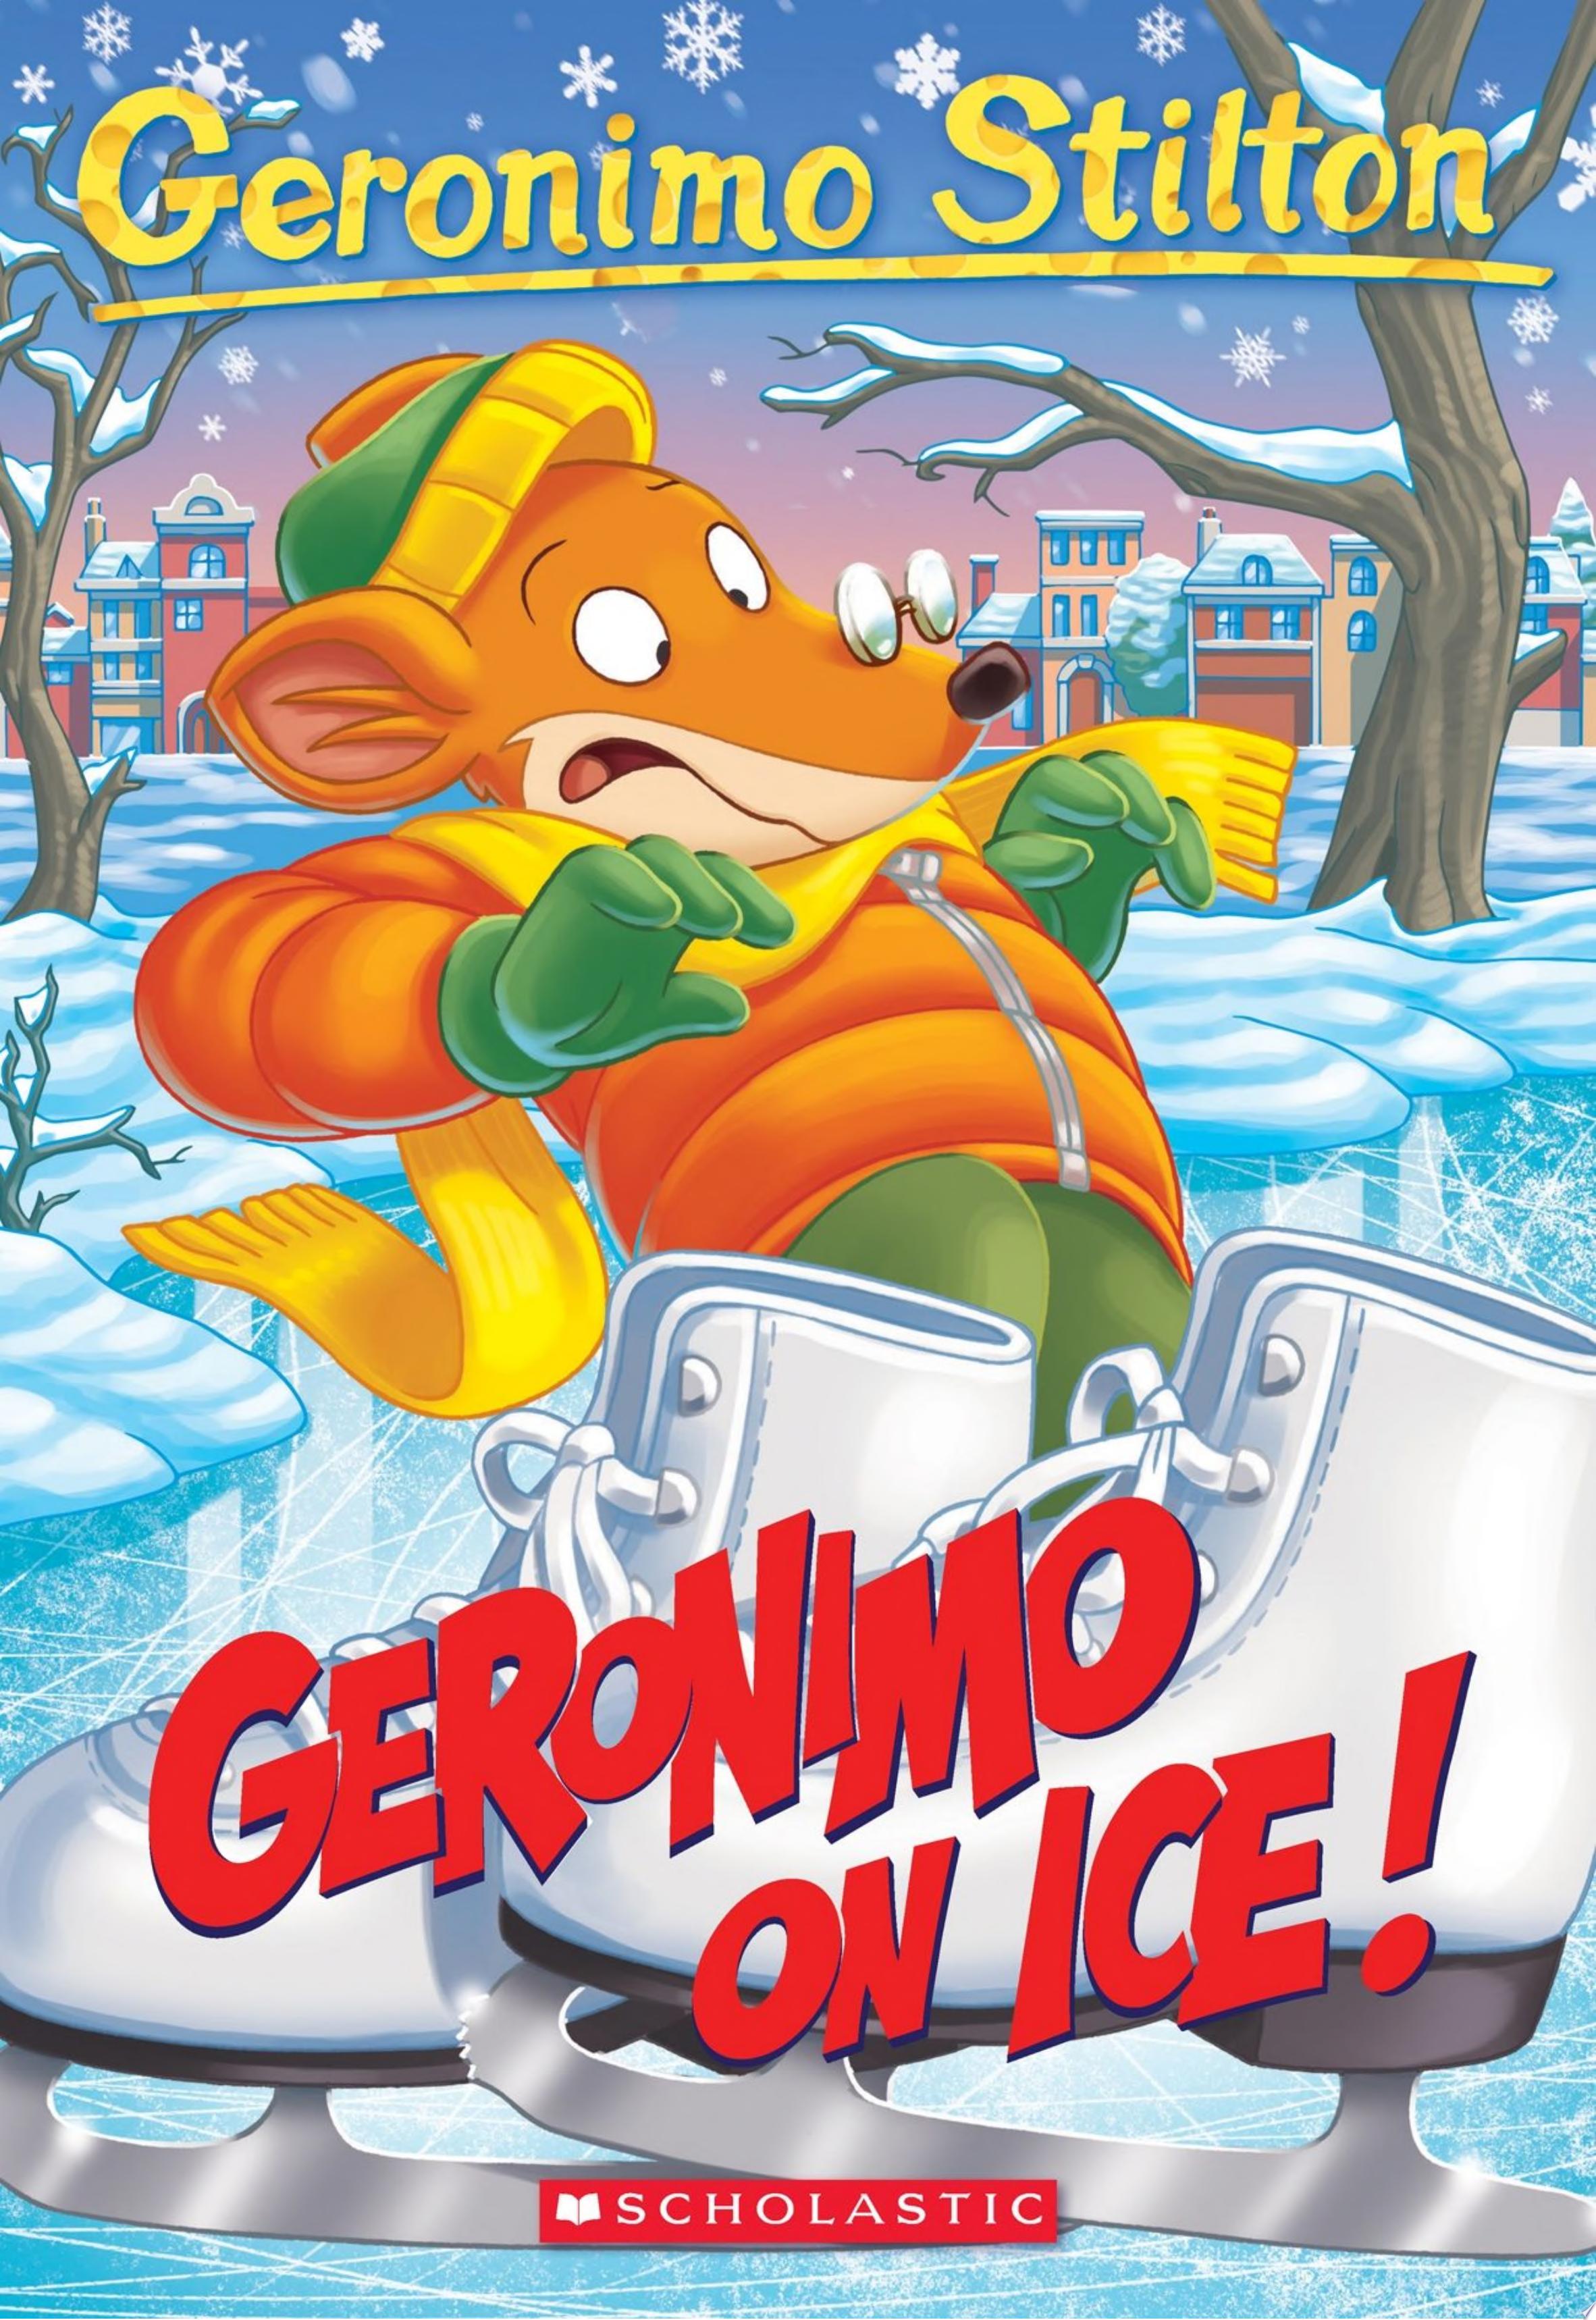 Image for "Geronimo On Ice! (Geronimo Stilton #71)"